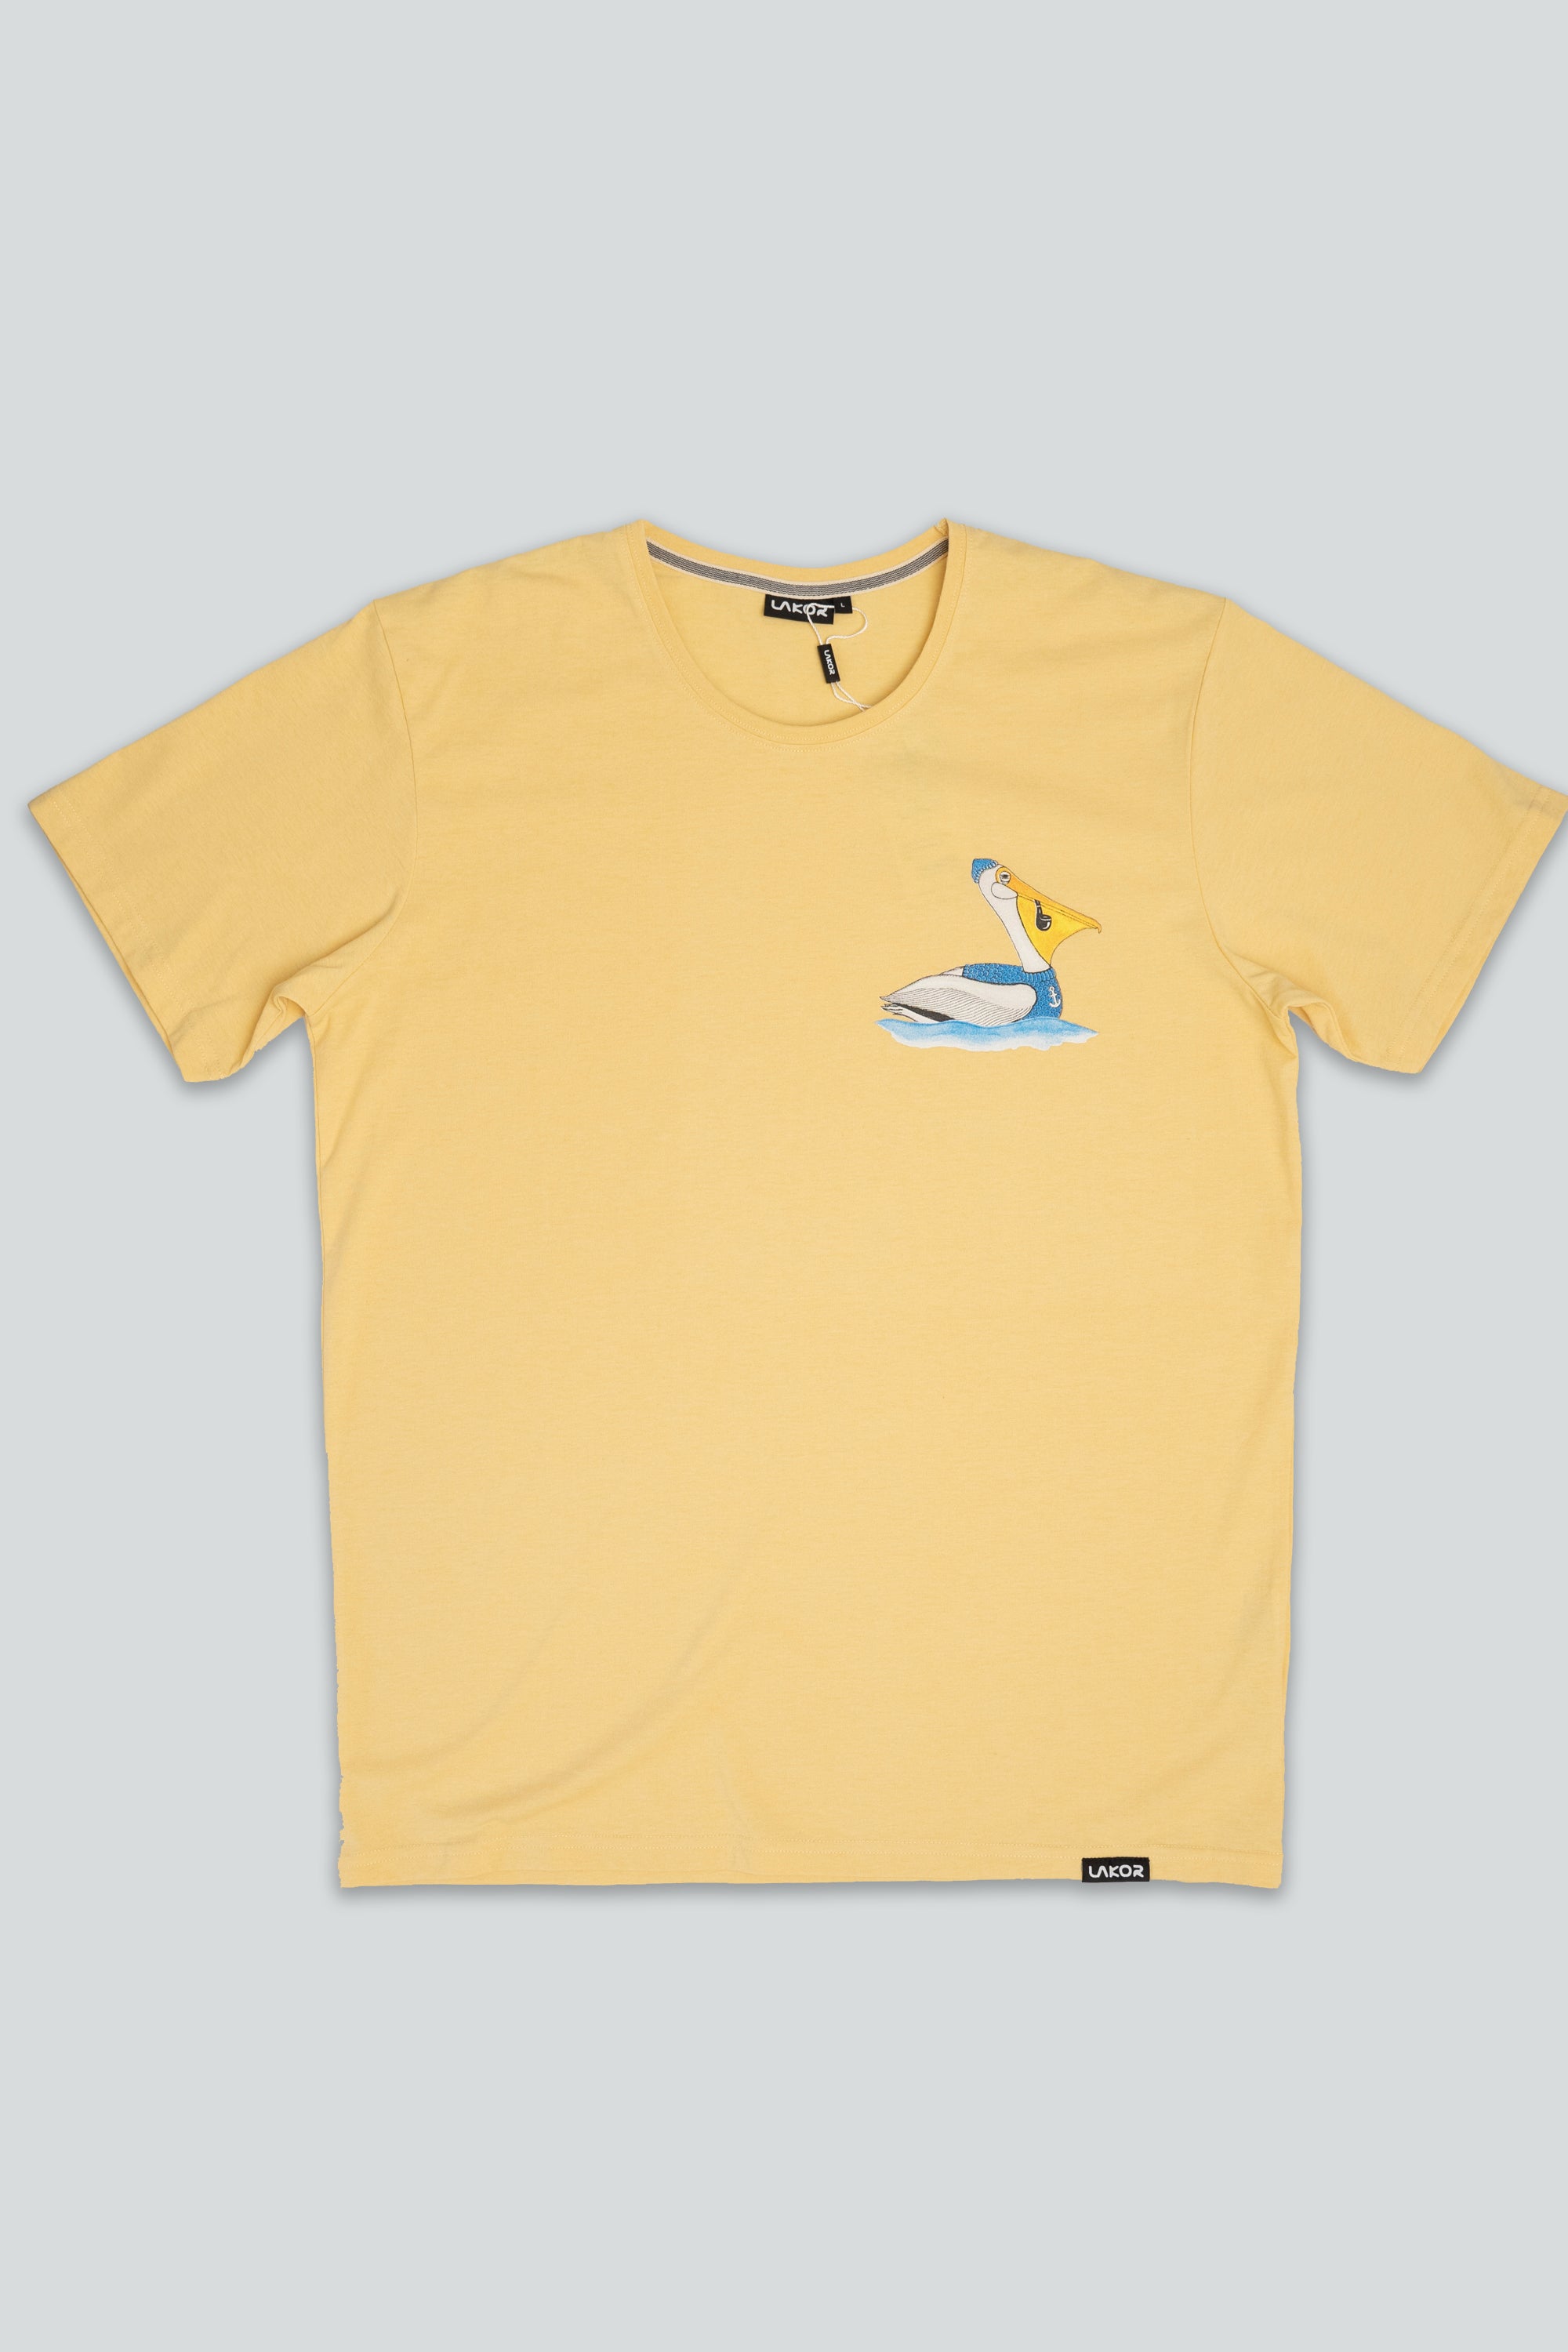 Sailing Pelican T-shirt (Light Yellow)